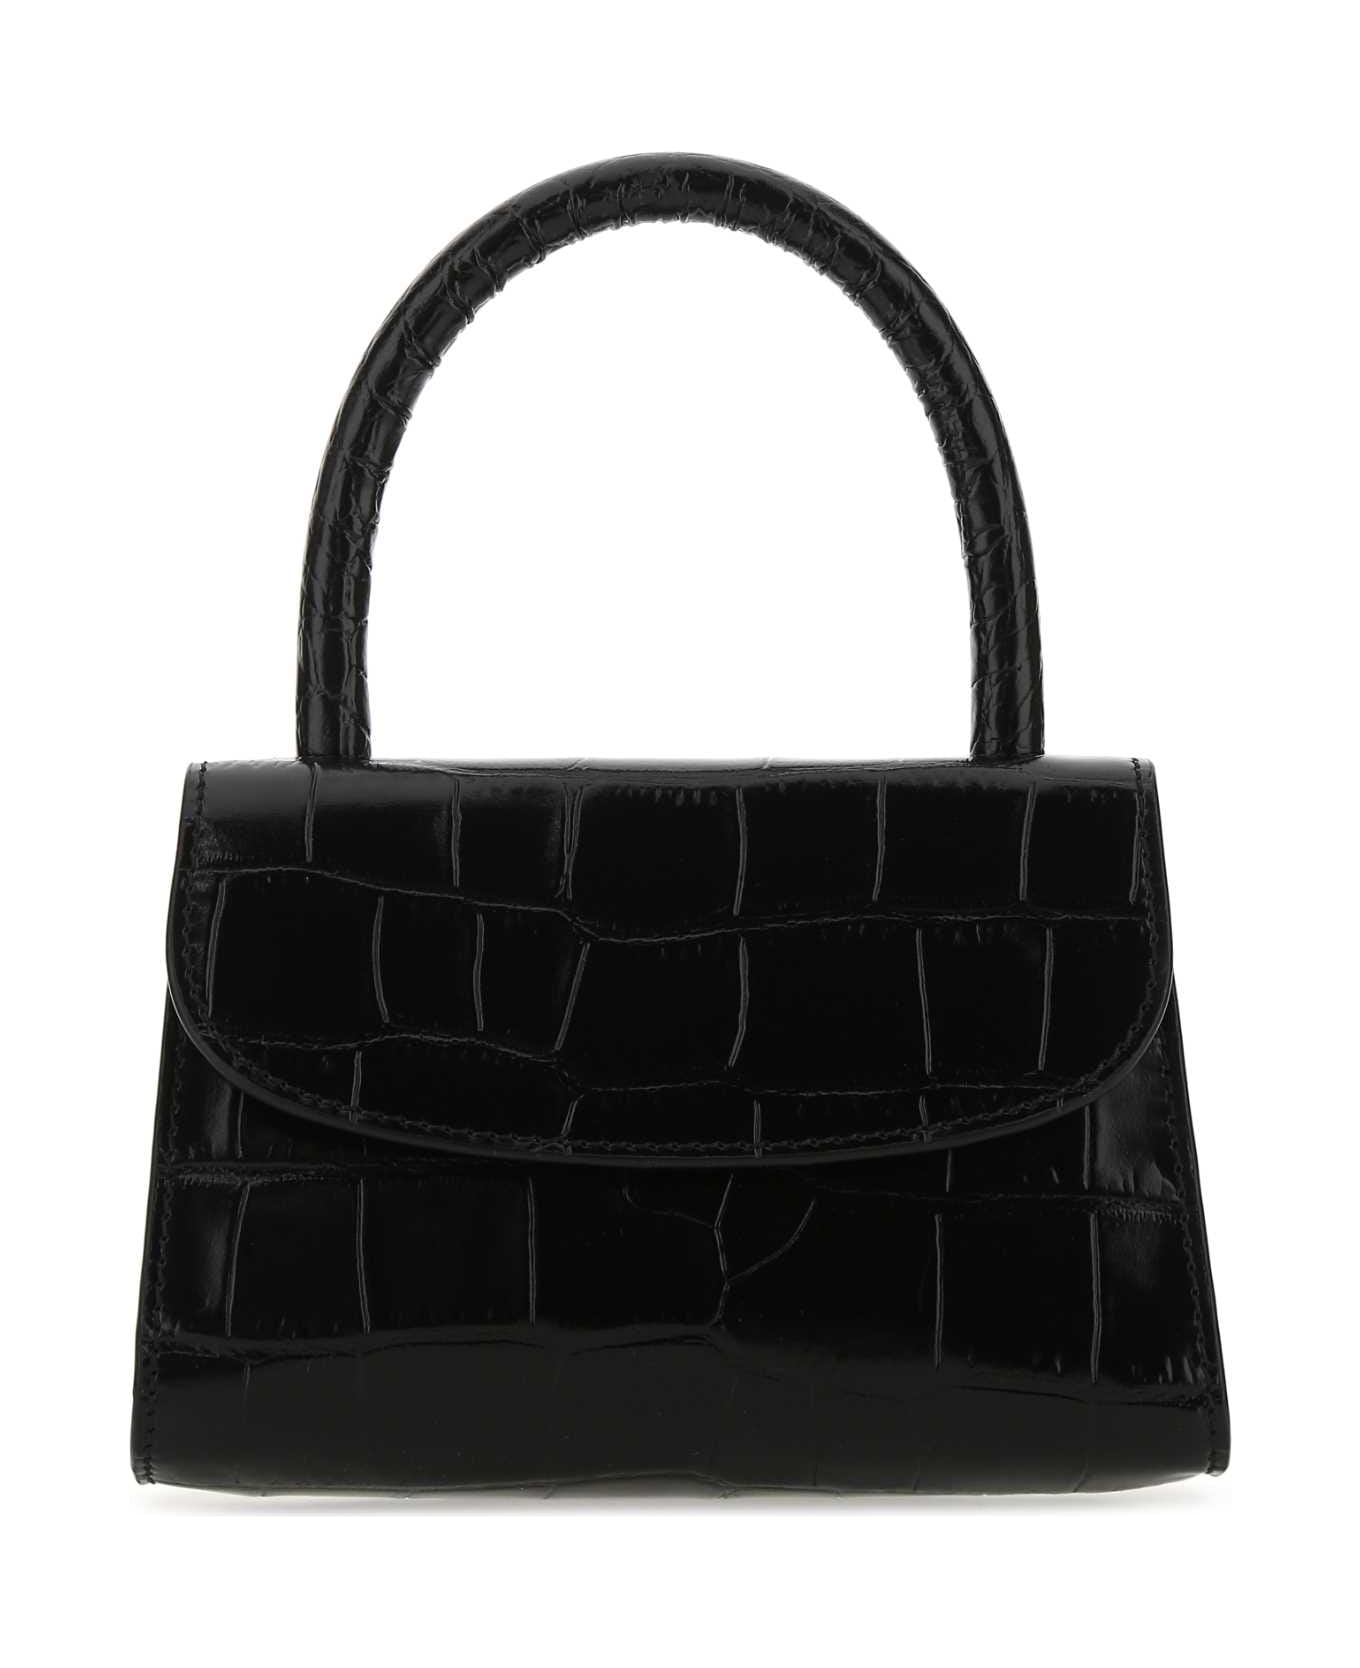 BY FAR Black Leather Mini Handbag - BL